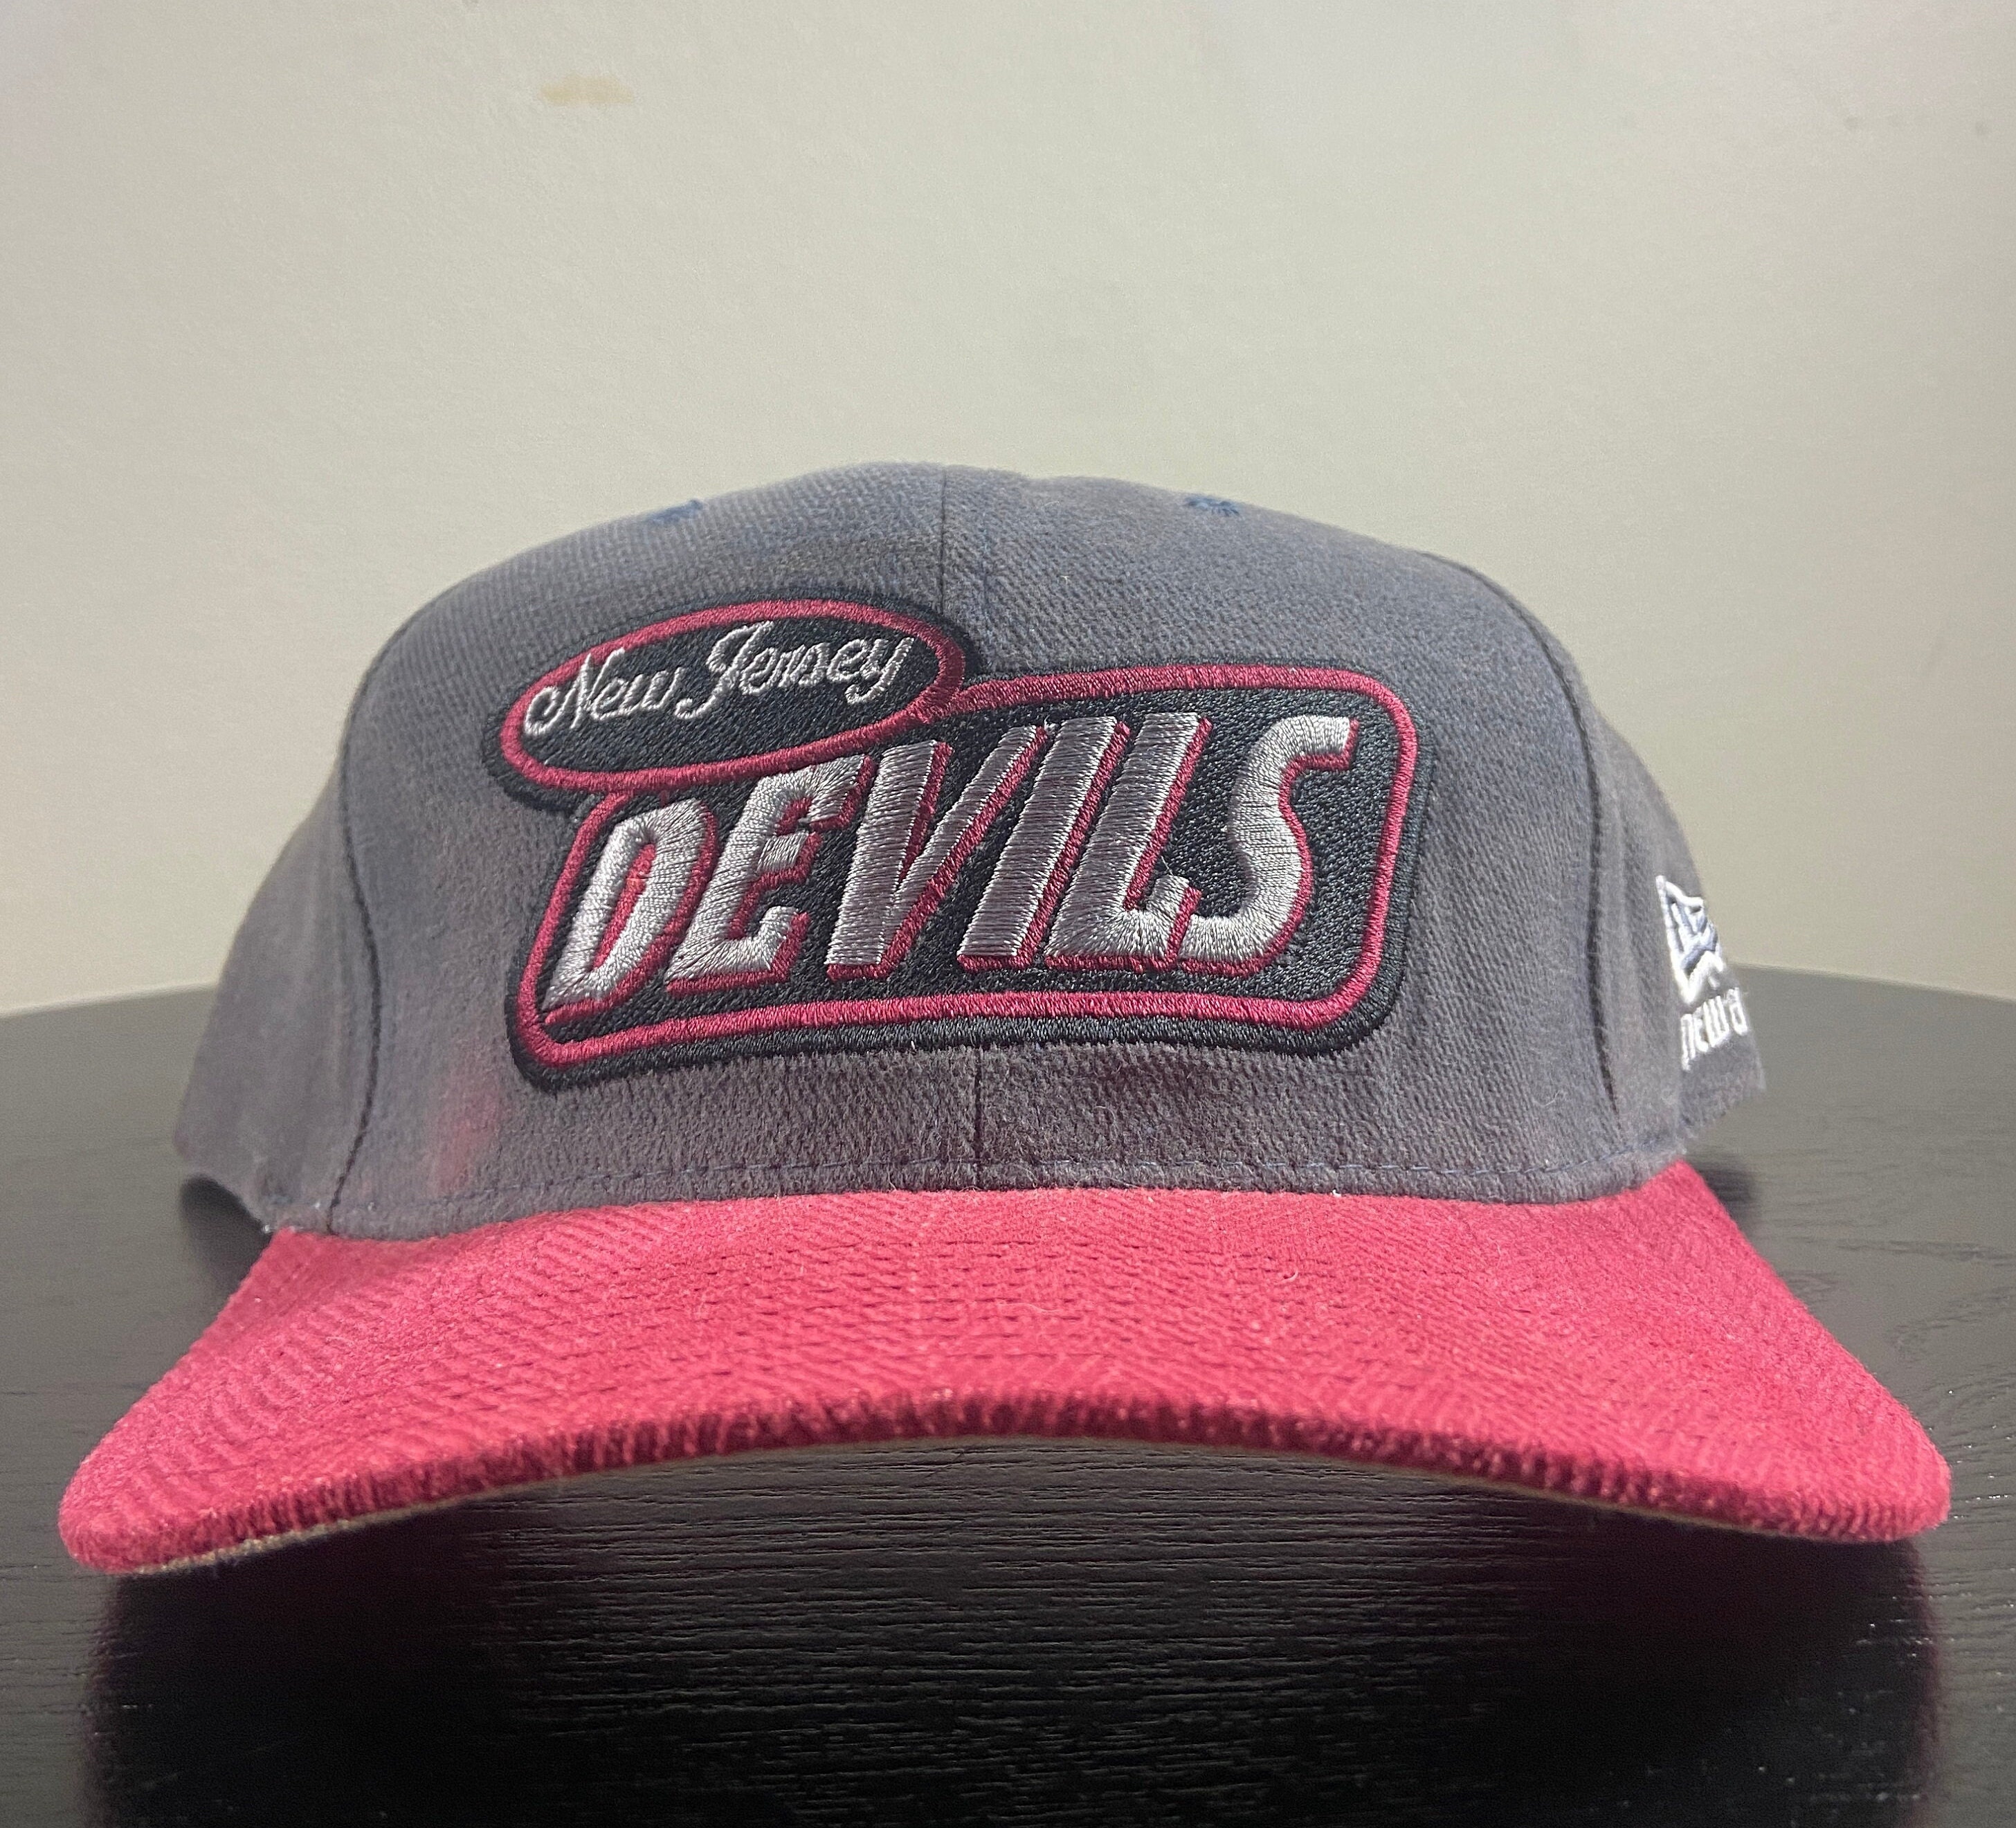 New Jersey Devils Hat Vintage - White - MSG Plus - NJ - RARE - FREE SHIP!